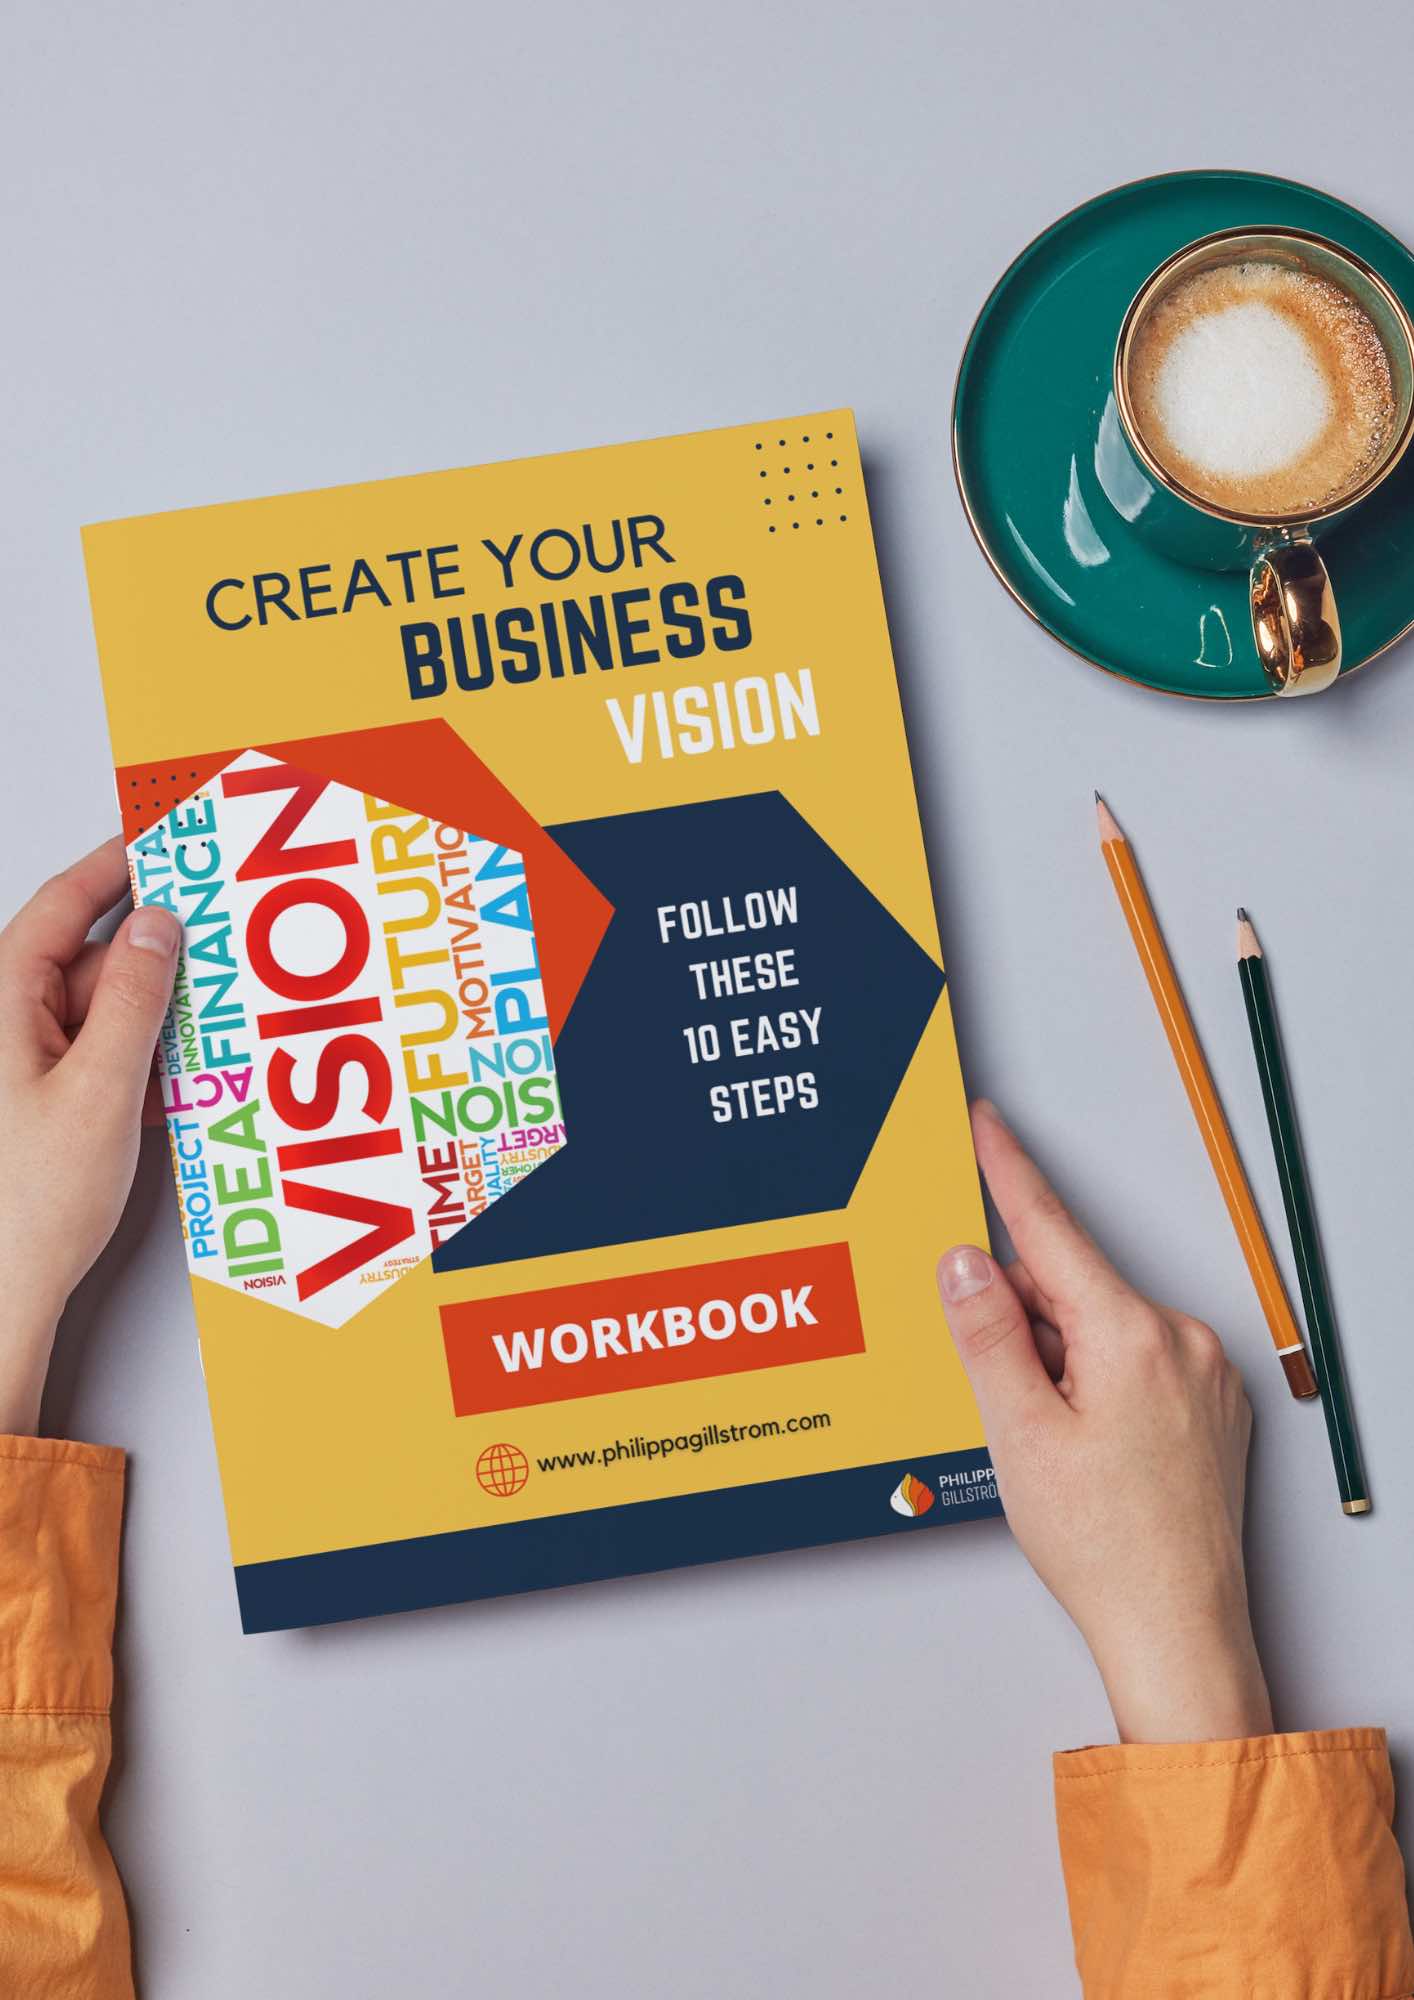 The Vision workbook